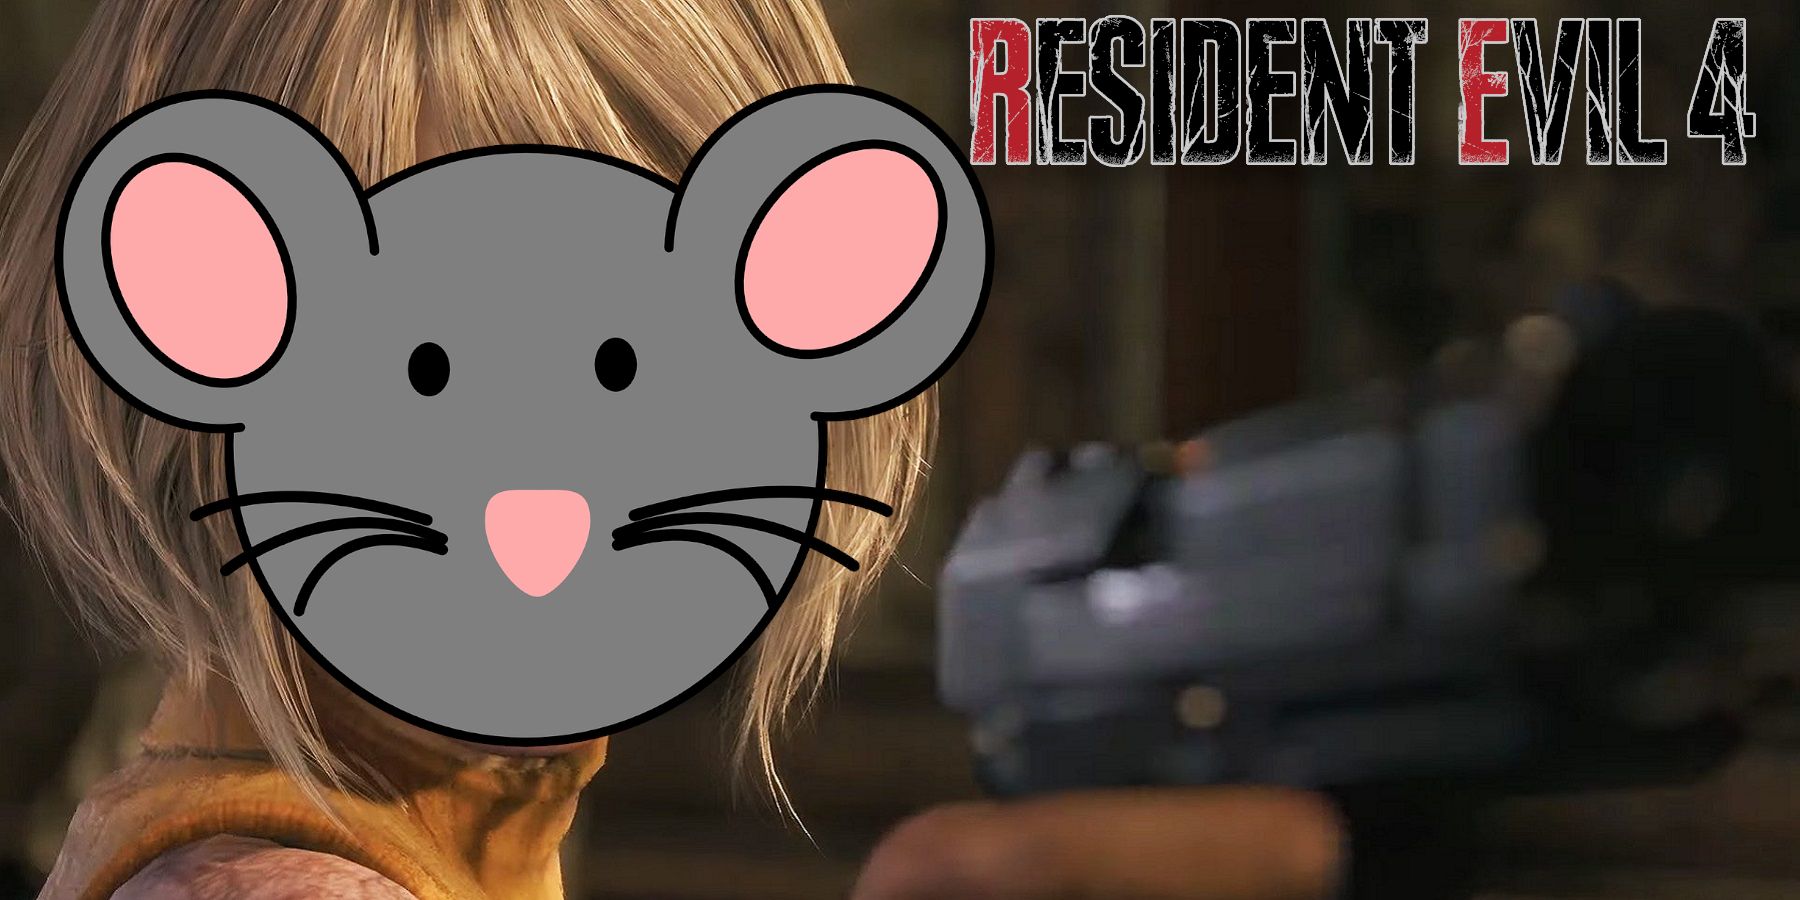 Resident Evil 4's Ashley mouse meme explained - Polygon